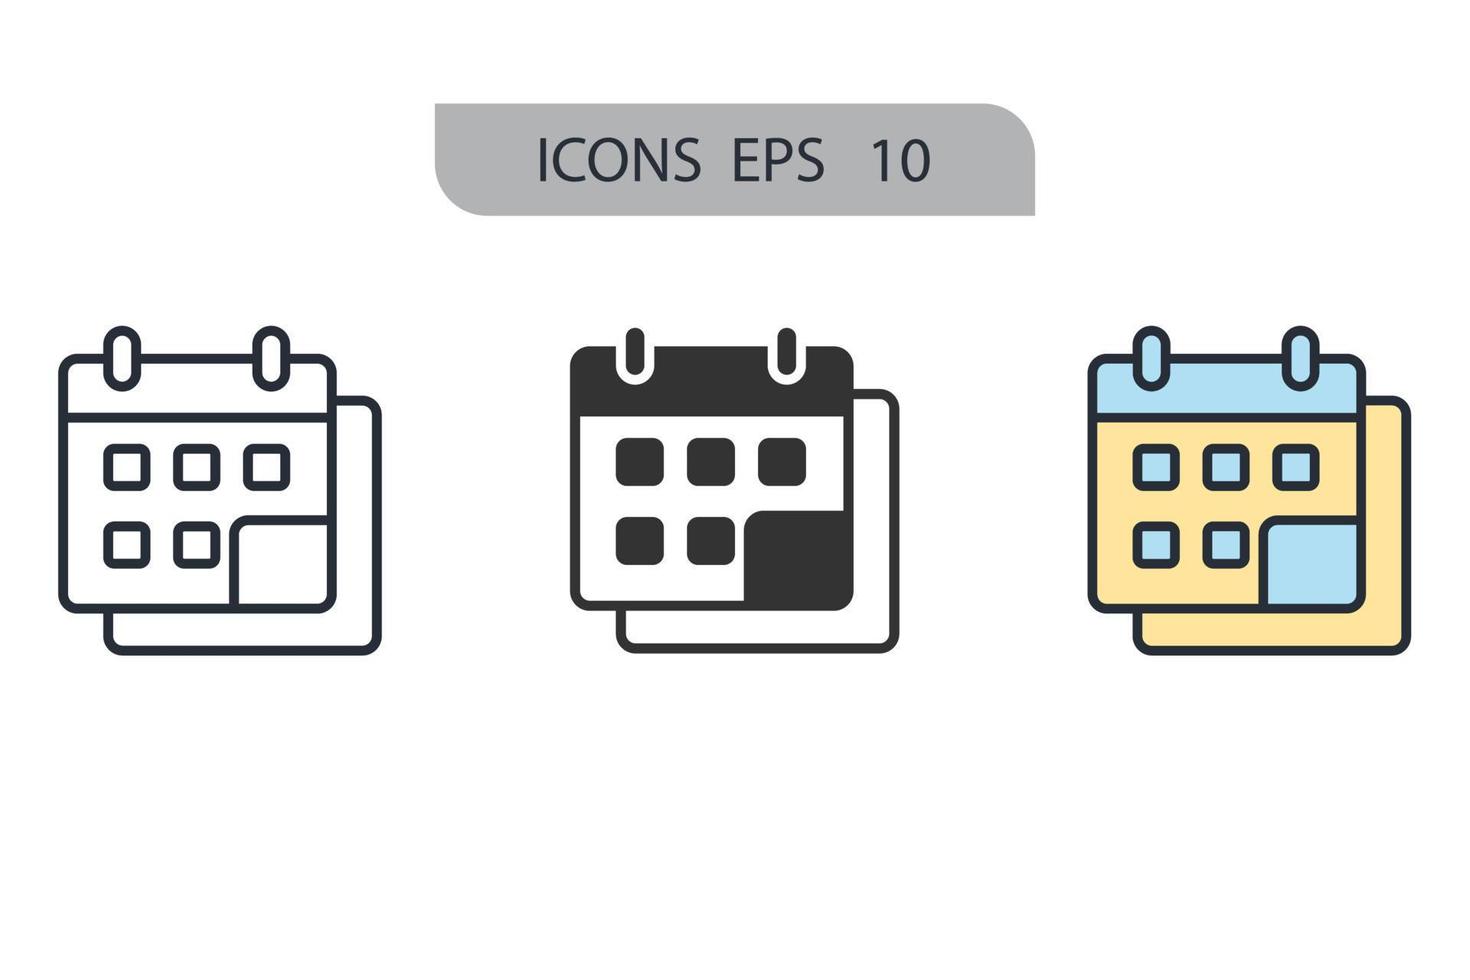 iconos de programación símbolo elementos vectoriales para web infográfico vector